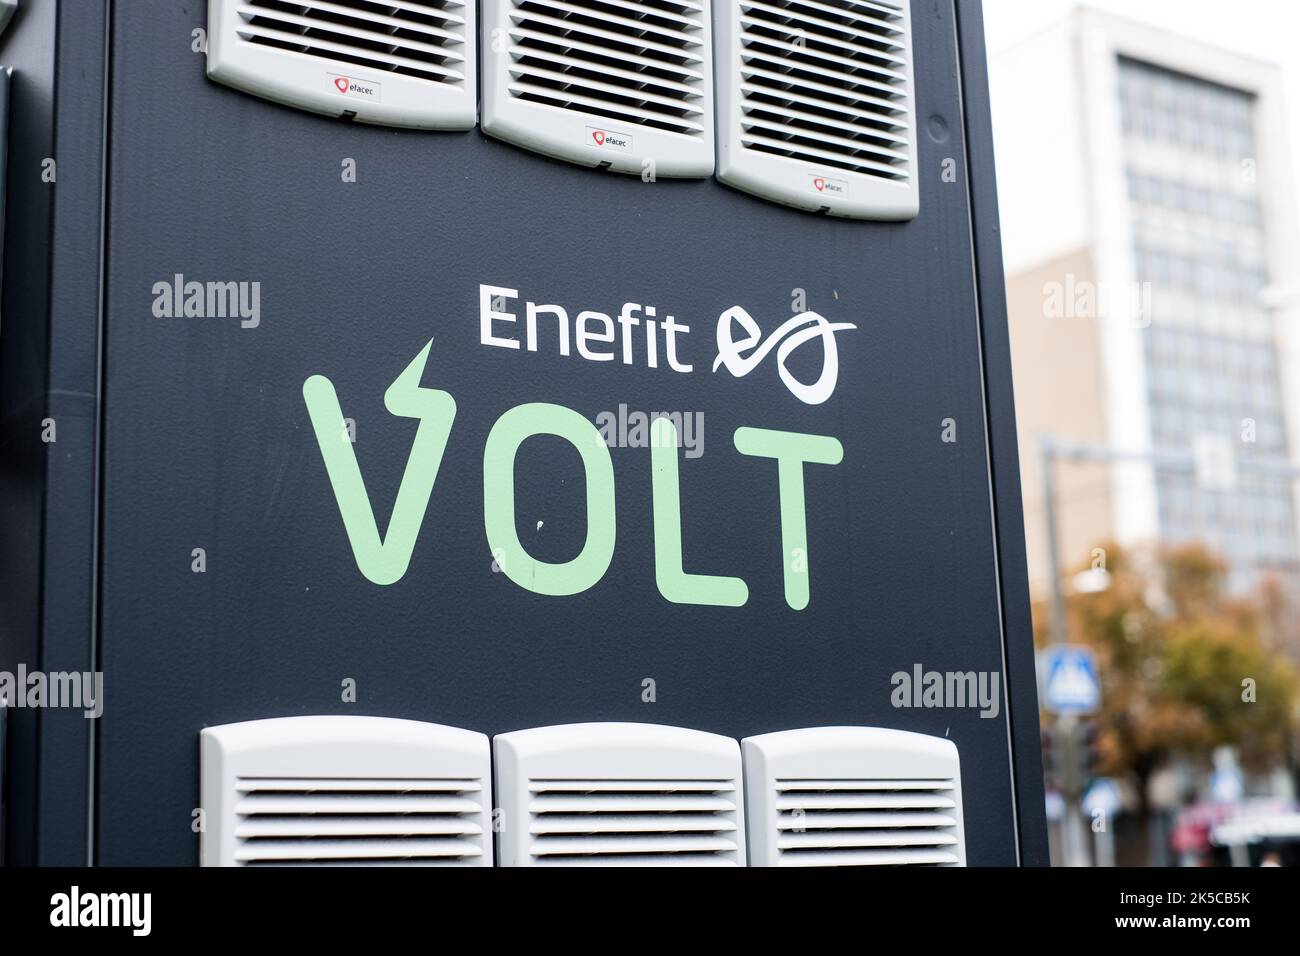 Tallinn, Estonia - September 23, 2022: Enefit Volt public electrical vehicle charging point. Stock Photo